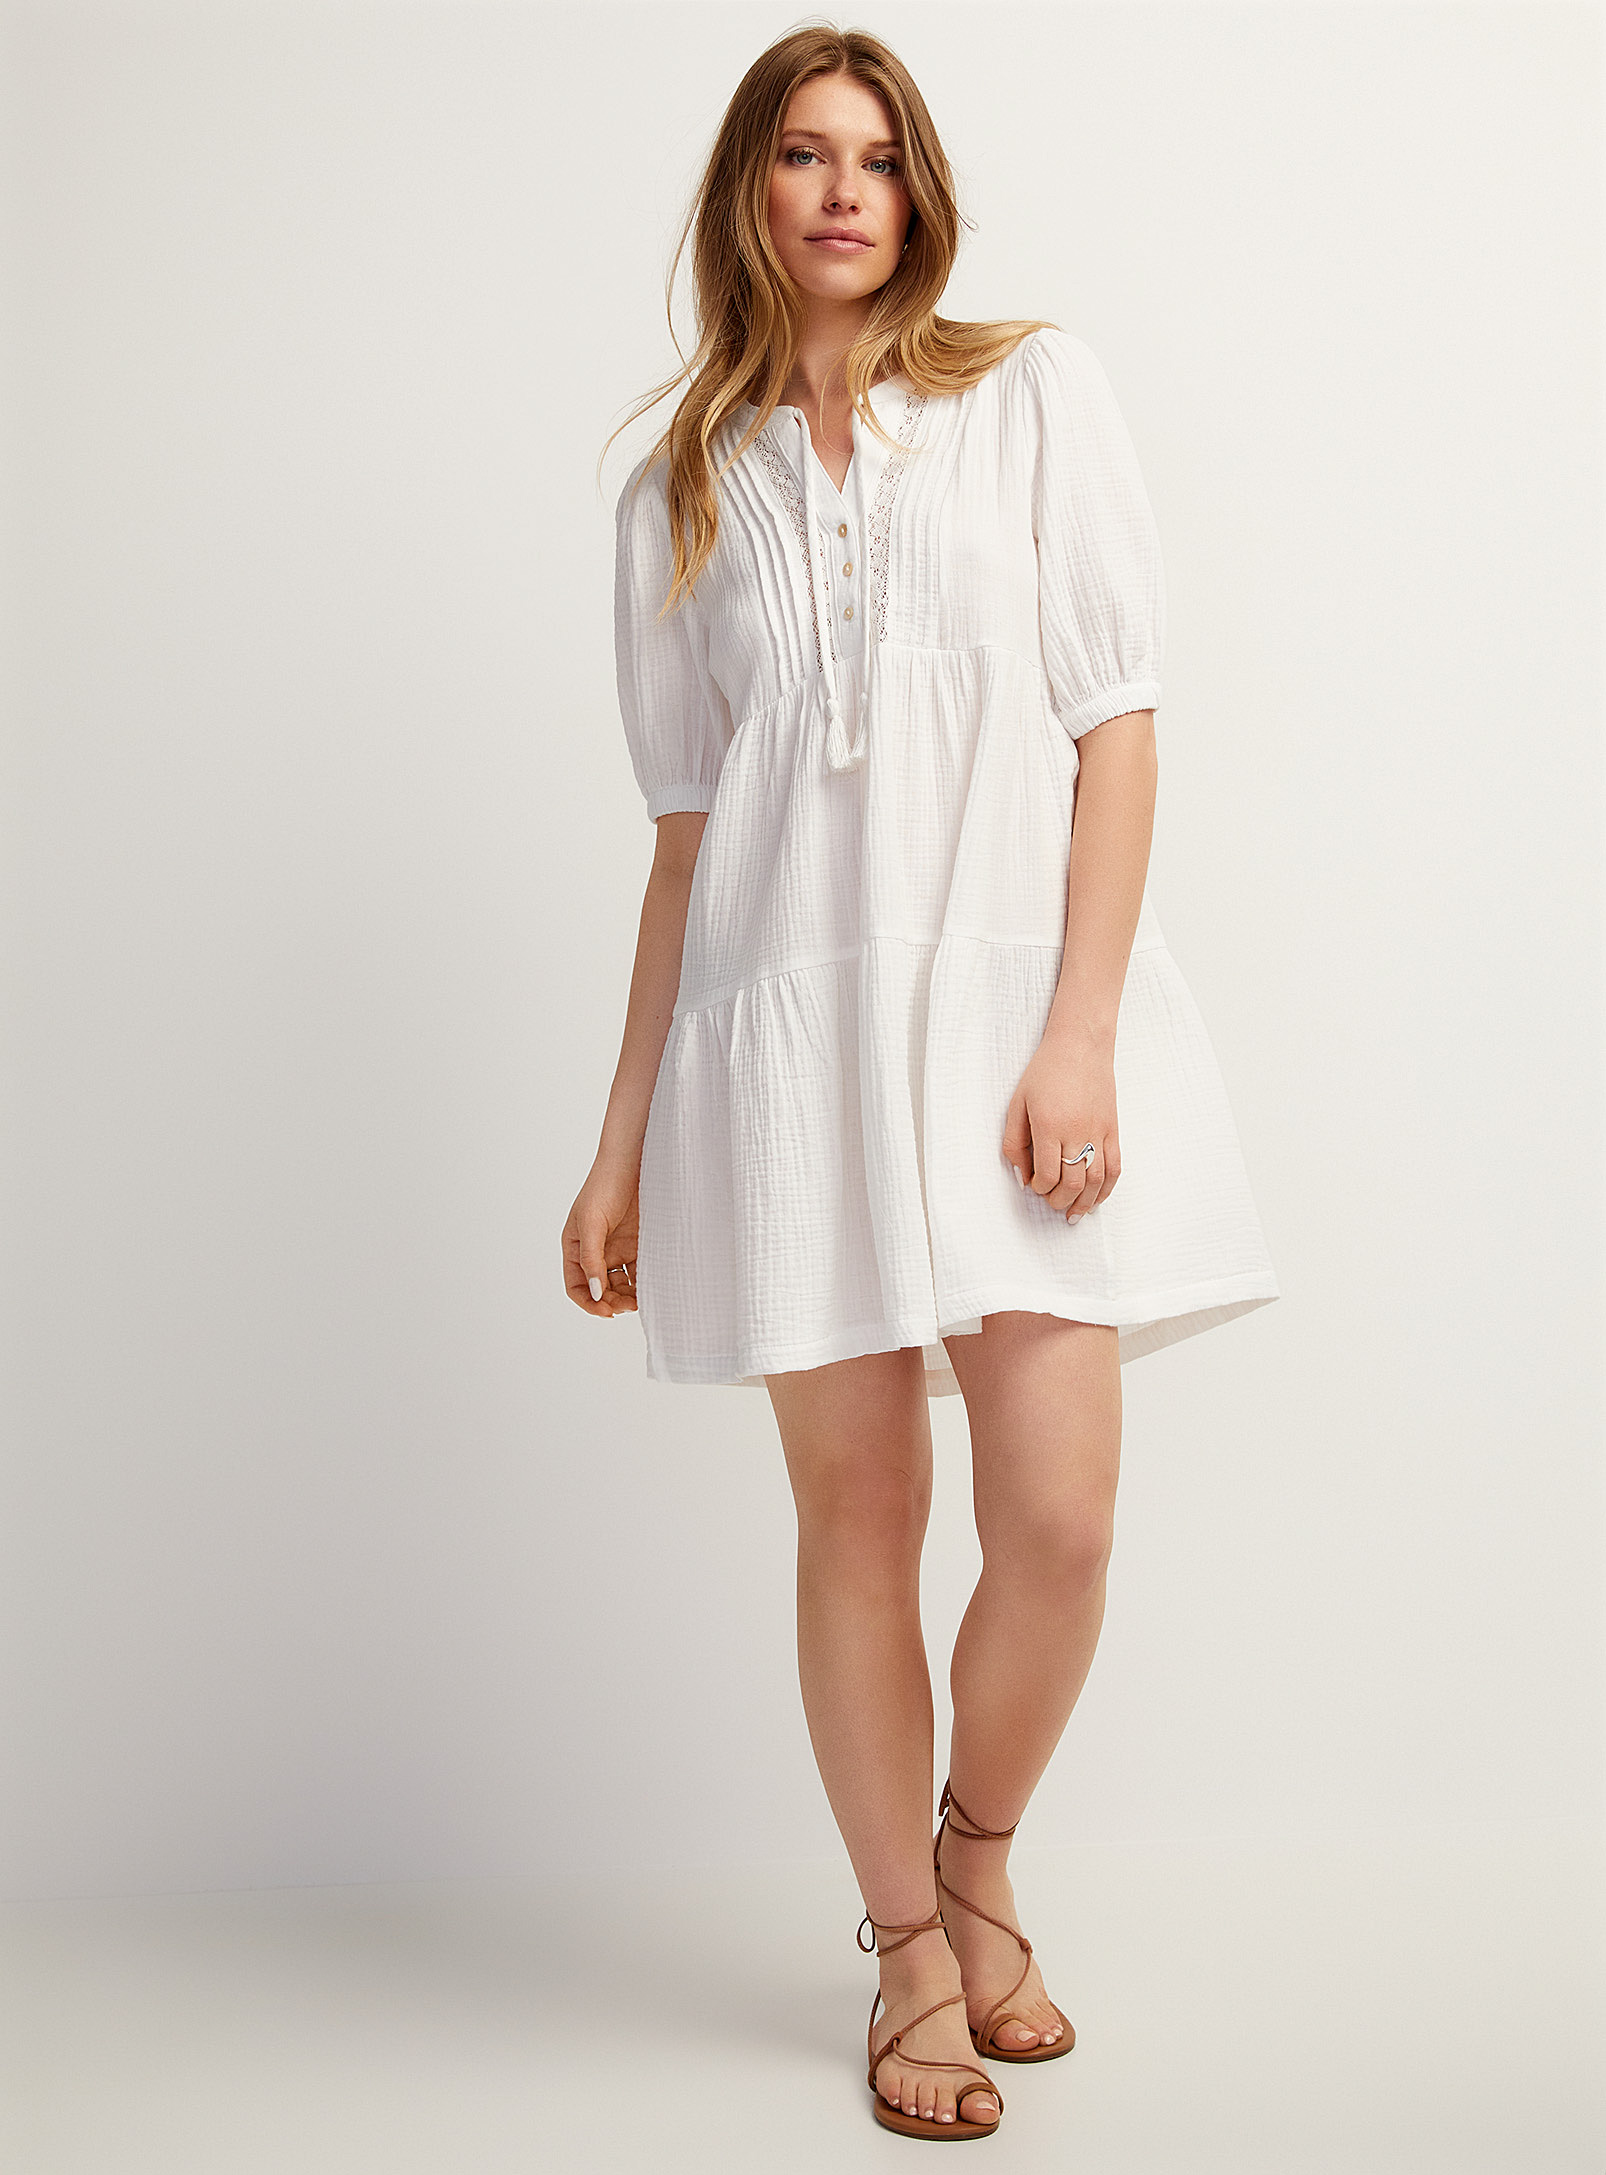 Vero Moda Cotton Gauze White Tiered Dress